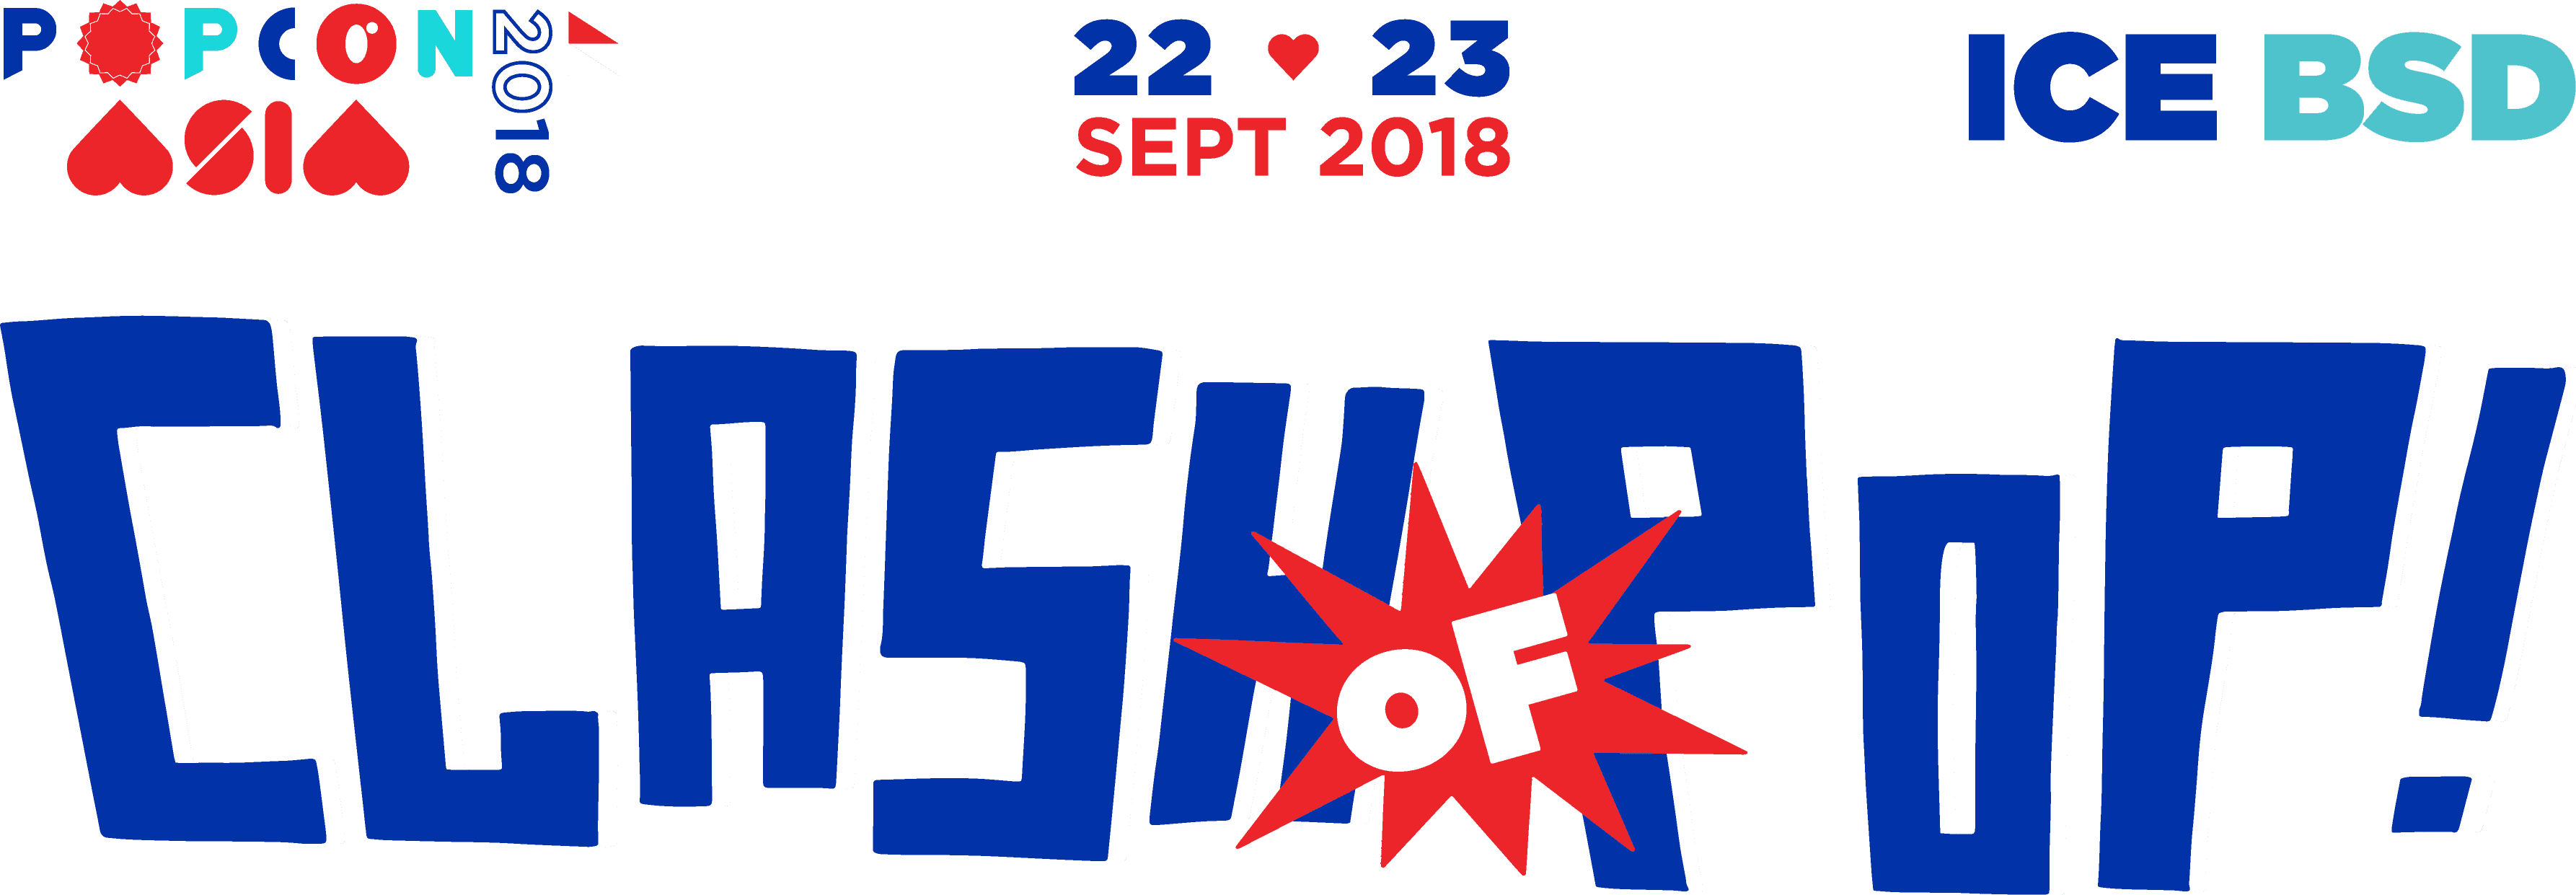 POPCON Asia 2018: Clash of Pop Siap Digelar 22-23 September 2018